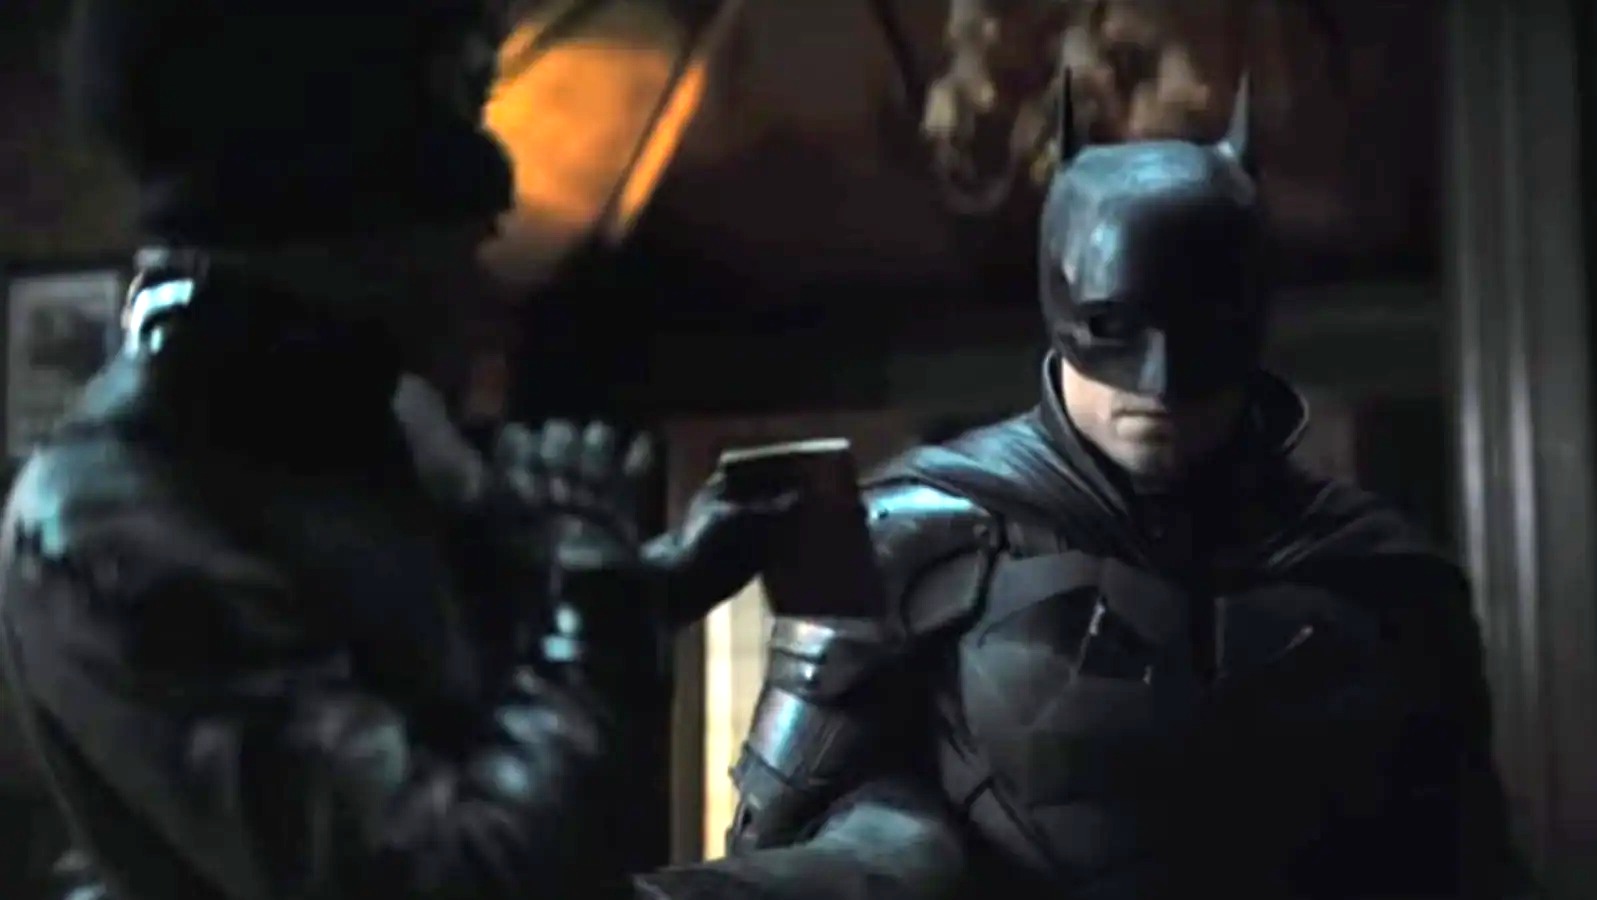 DC fans make fun of the ‘Batman’ genre’ via low budget TikTok film